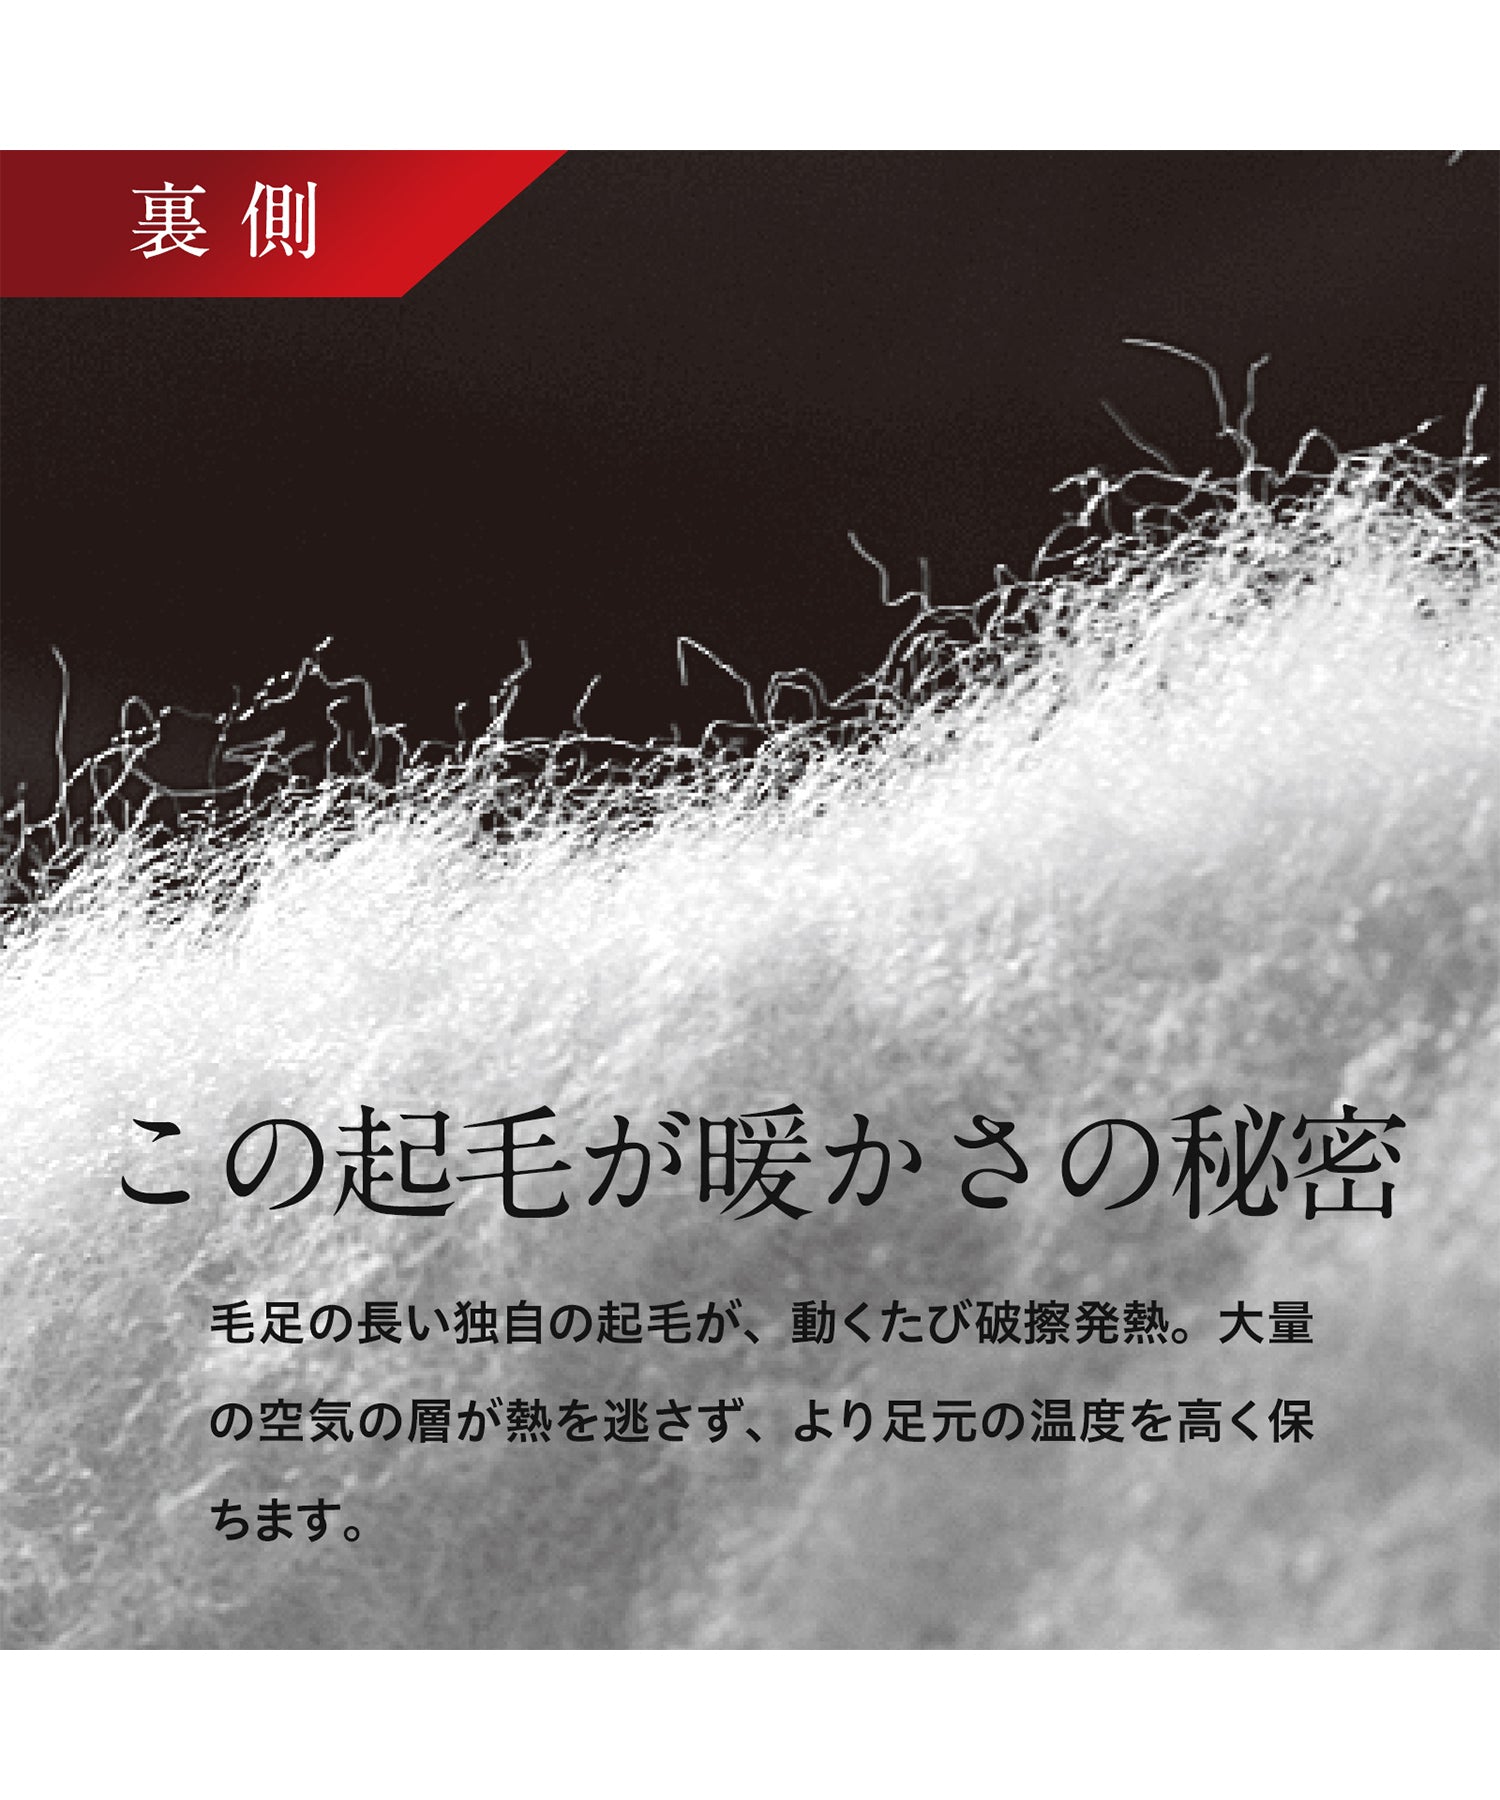 HEATRUB antibacterial deodorant model